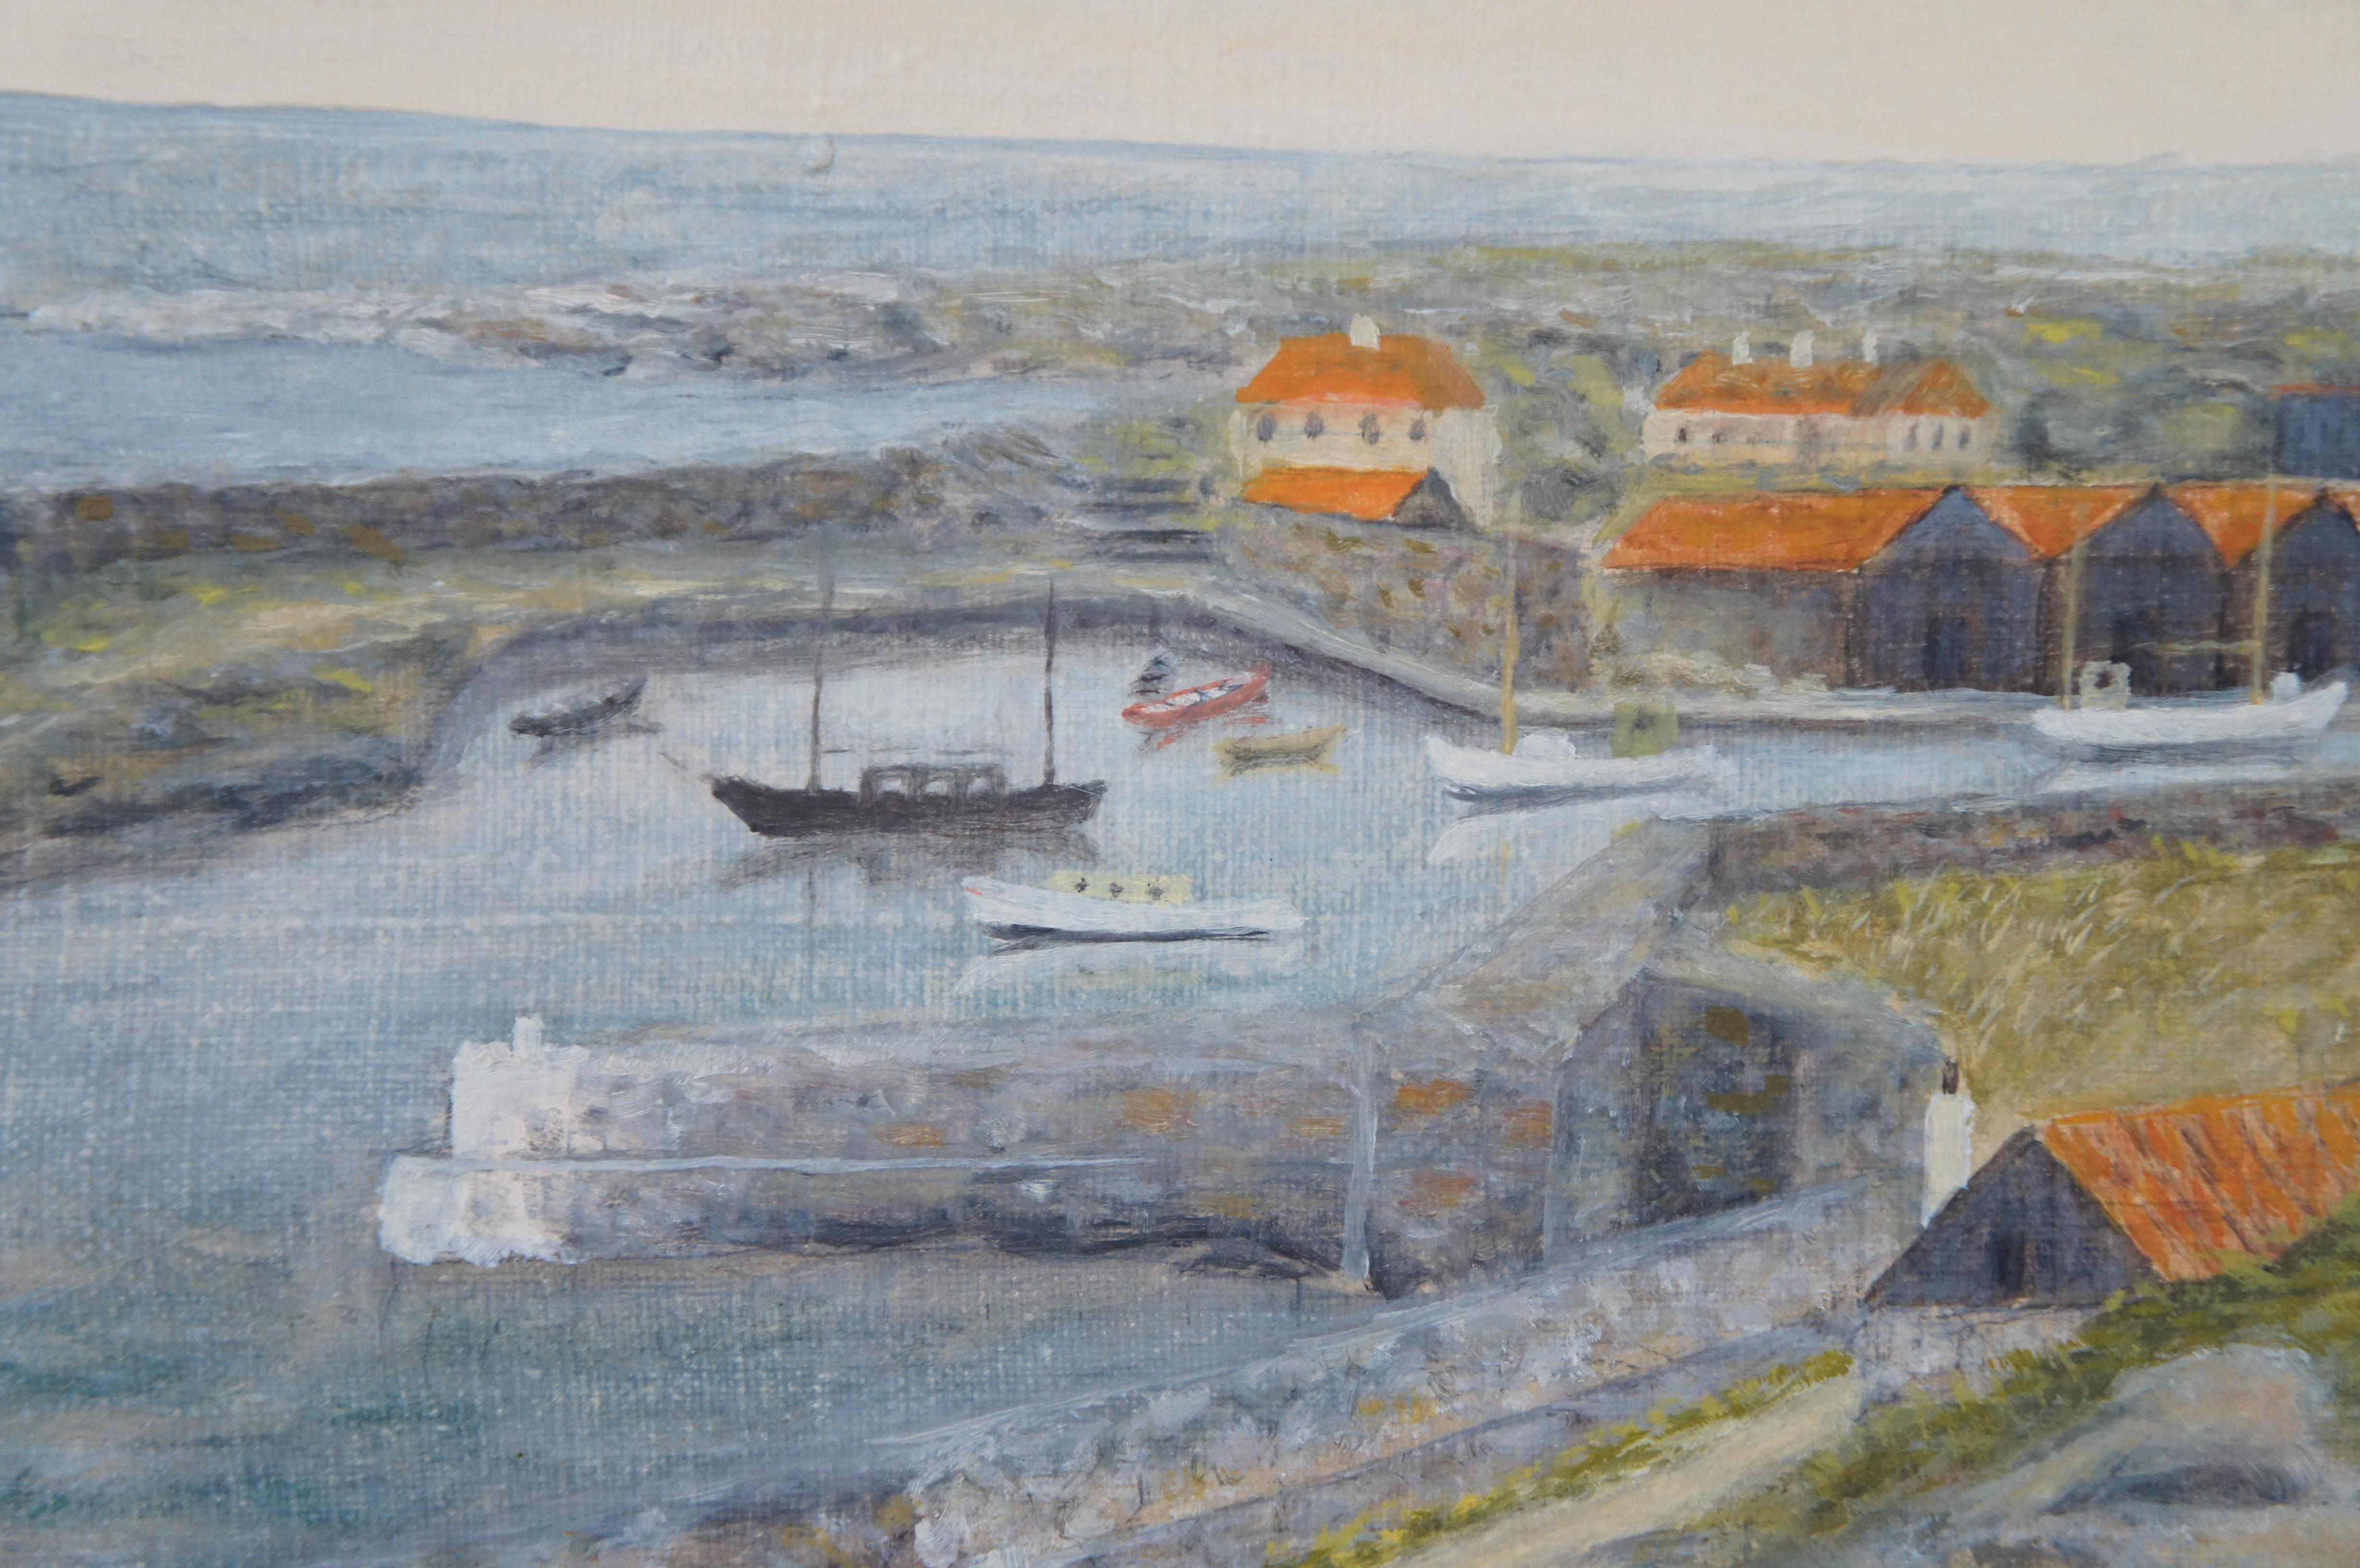 1954 J.K. Madsen Coastal Landscape Seascape Oil Painting on Canvas 34